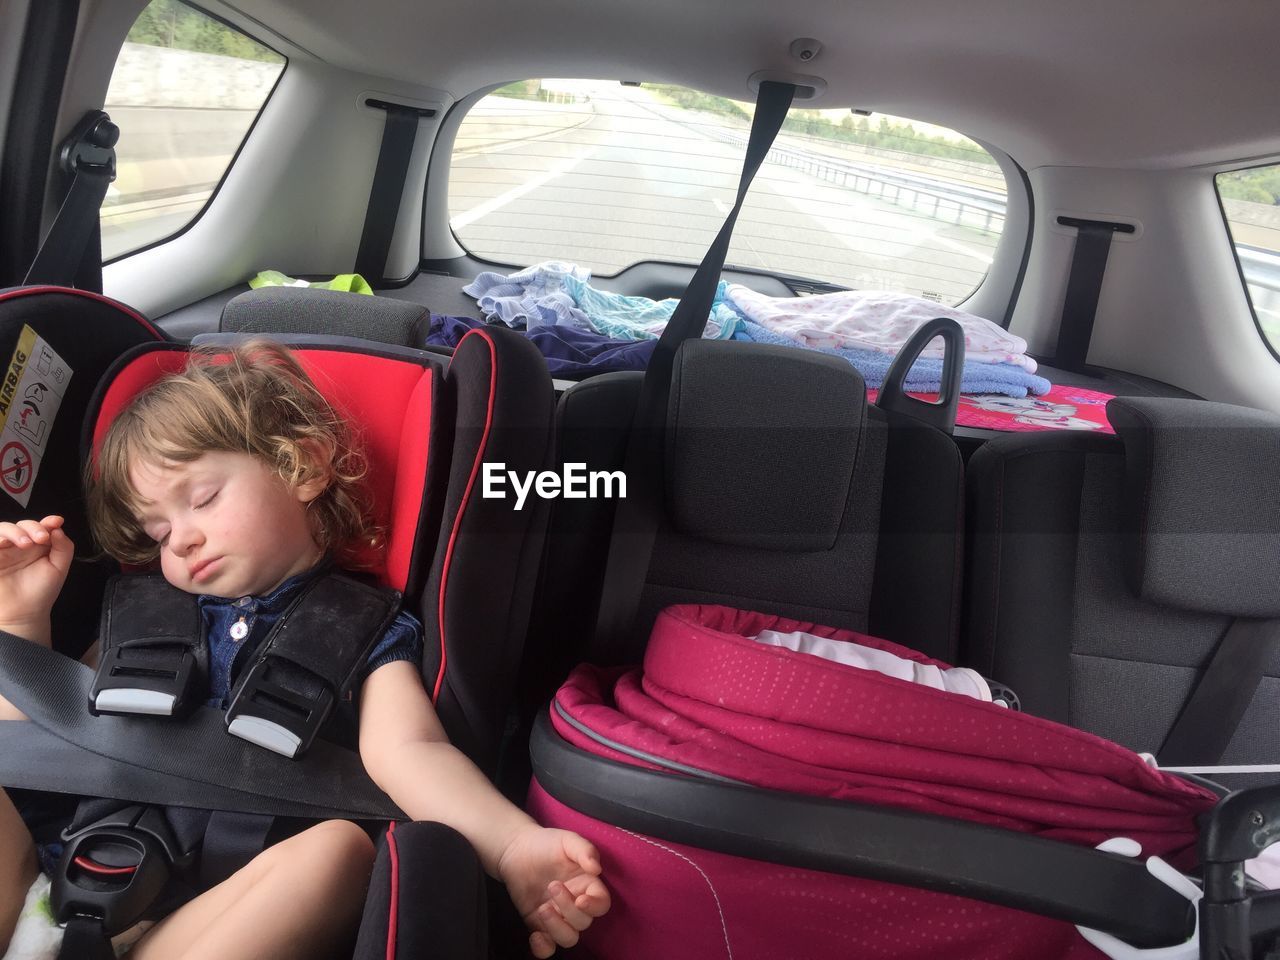 Cute girl sleeping on car during road trip